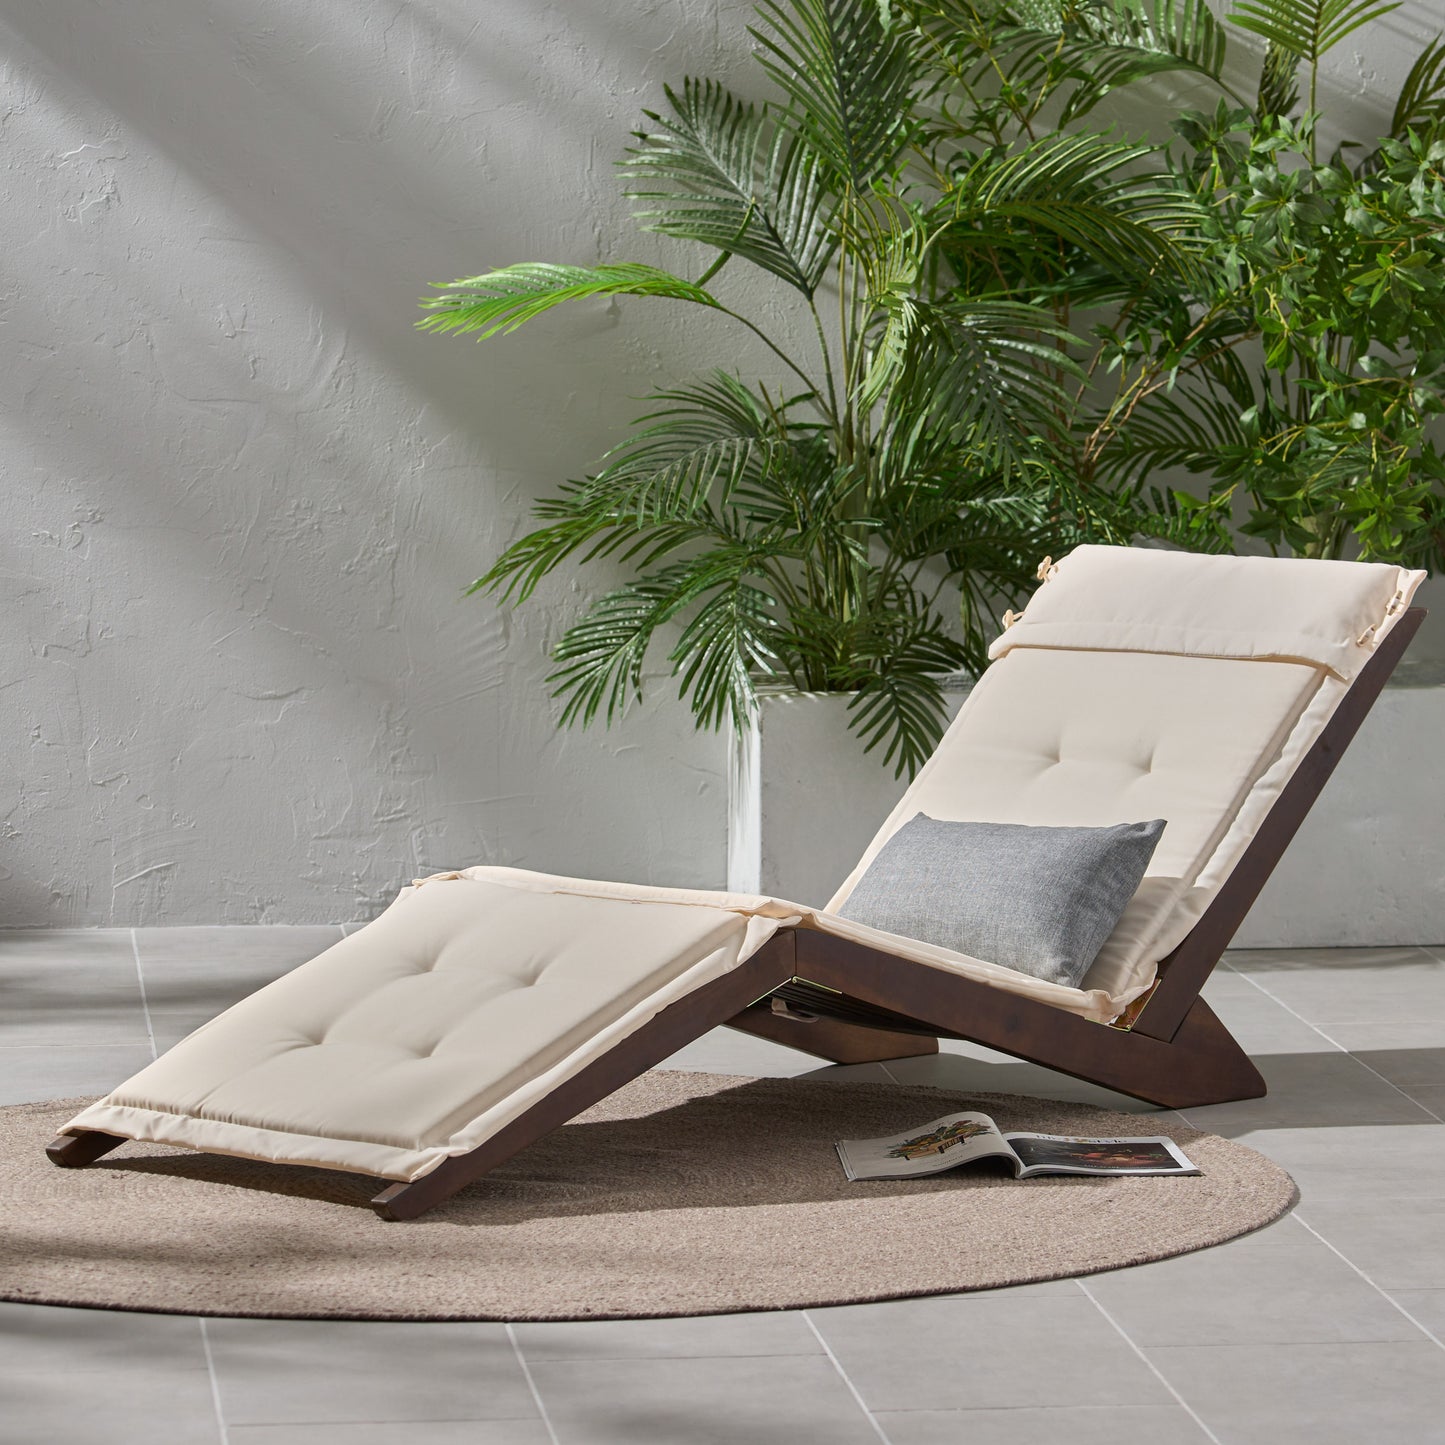 Midori Mahogany Wood Folding Chaise Lounger Chair w/ Cream Cushion